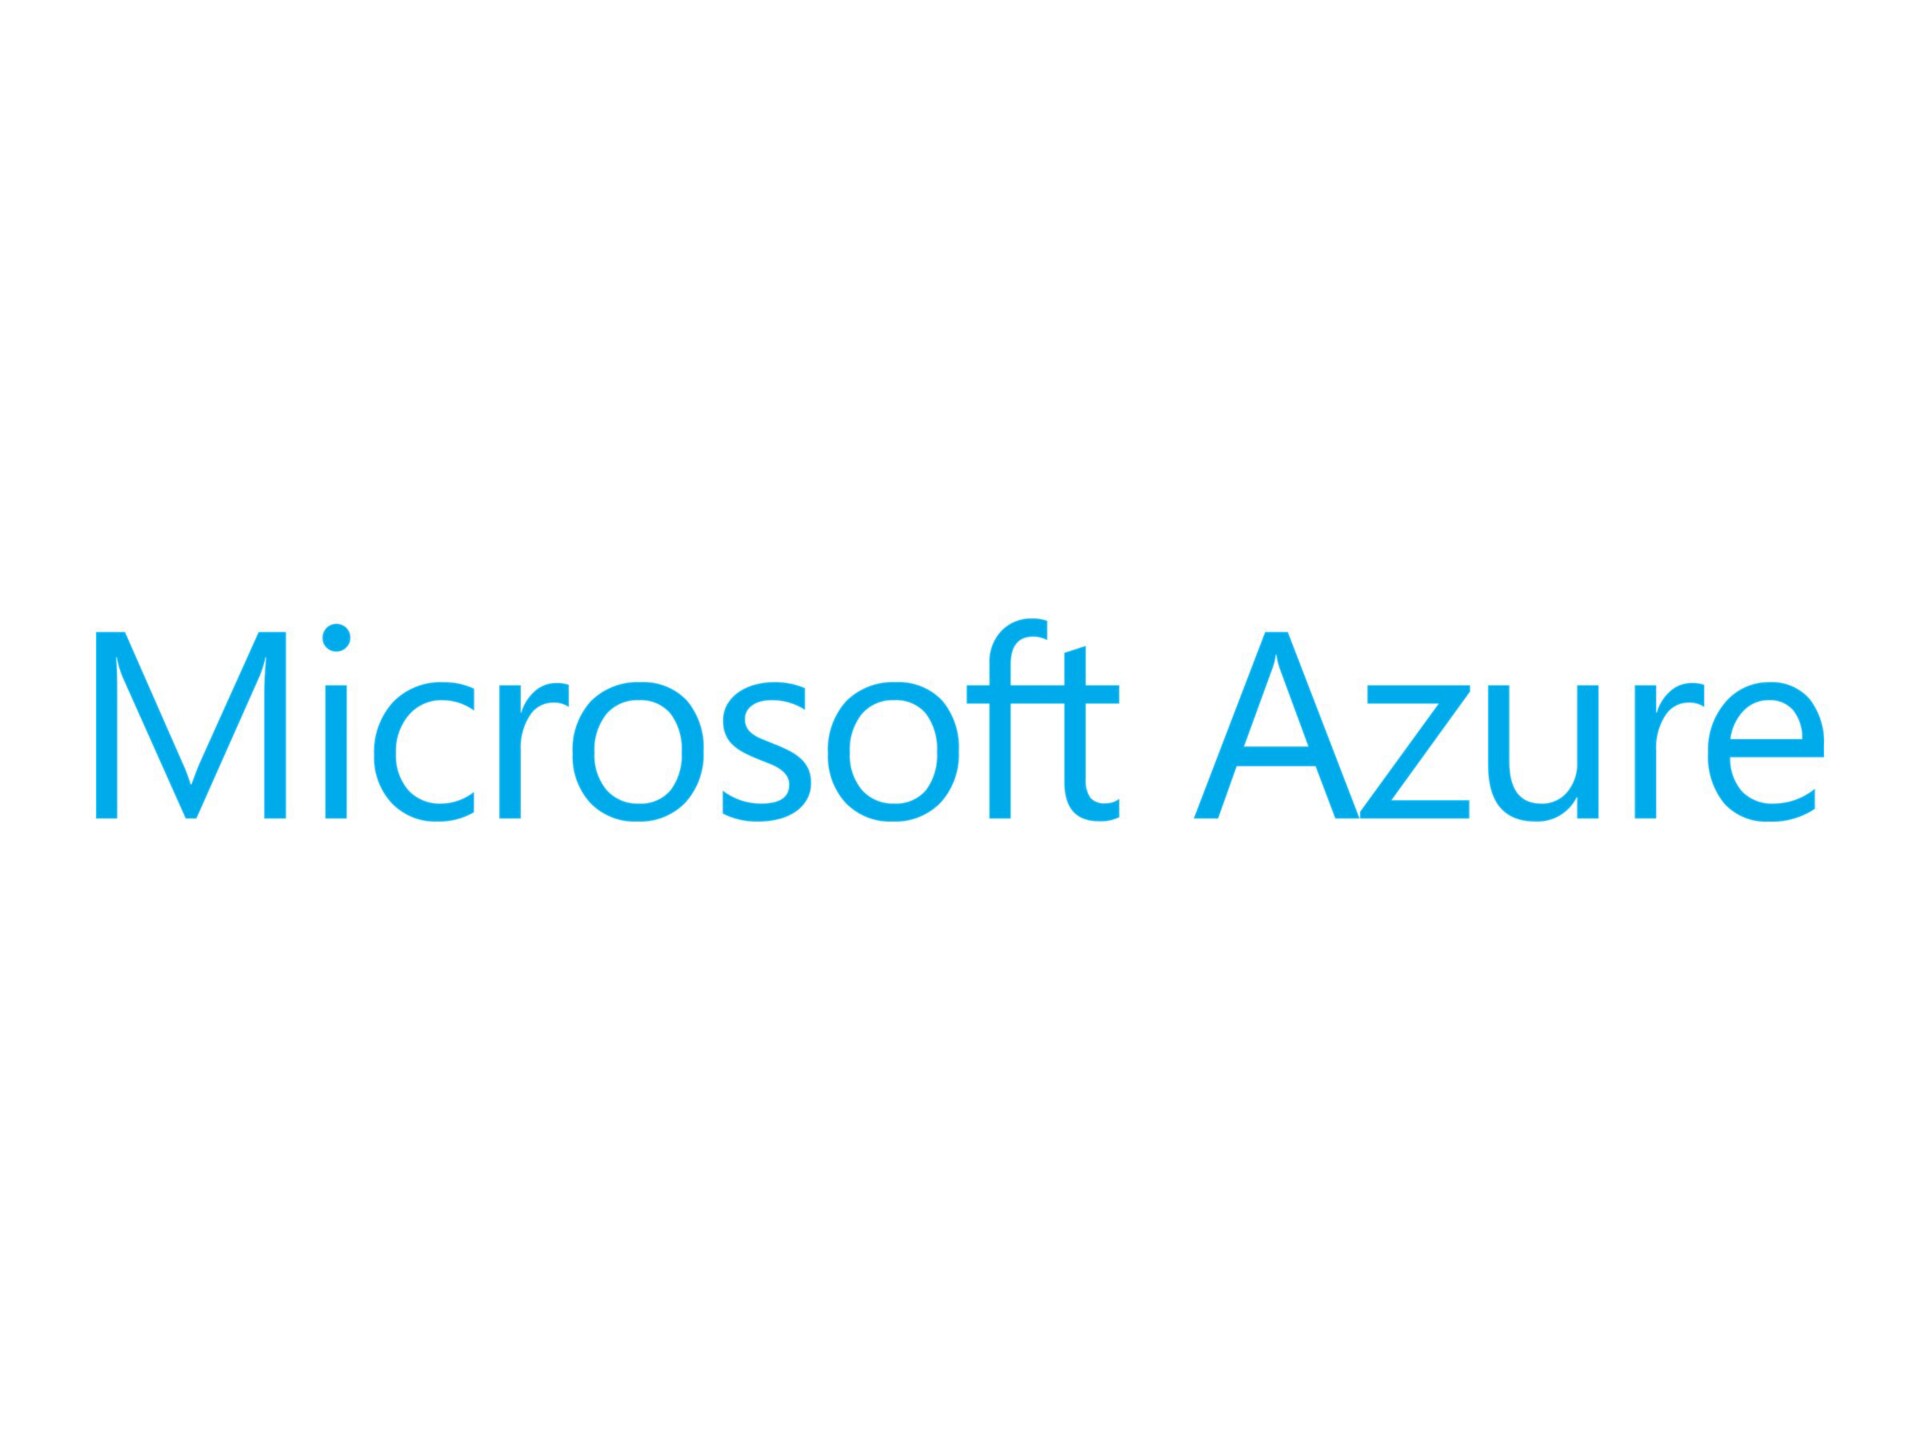 Microsoft Azure IoT Hub - Basic - B2 - fee - 1 unit per day